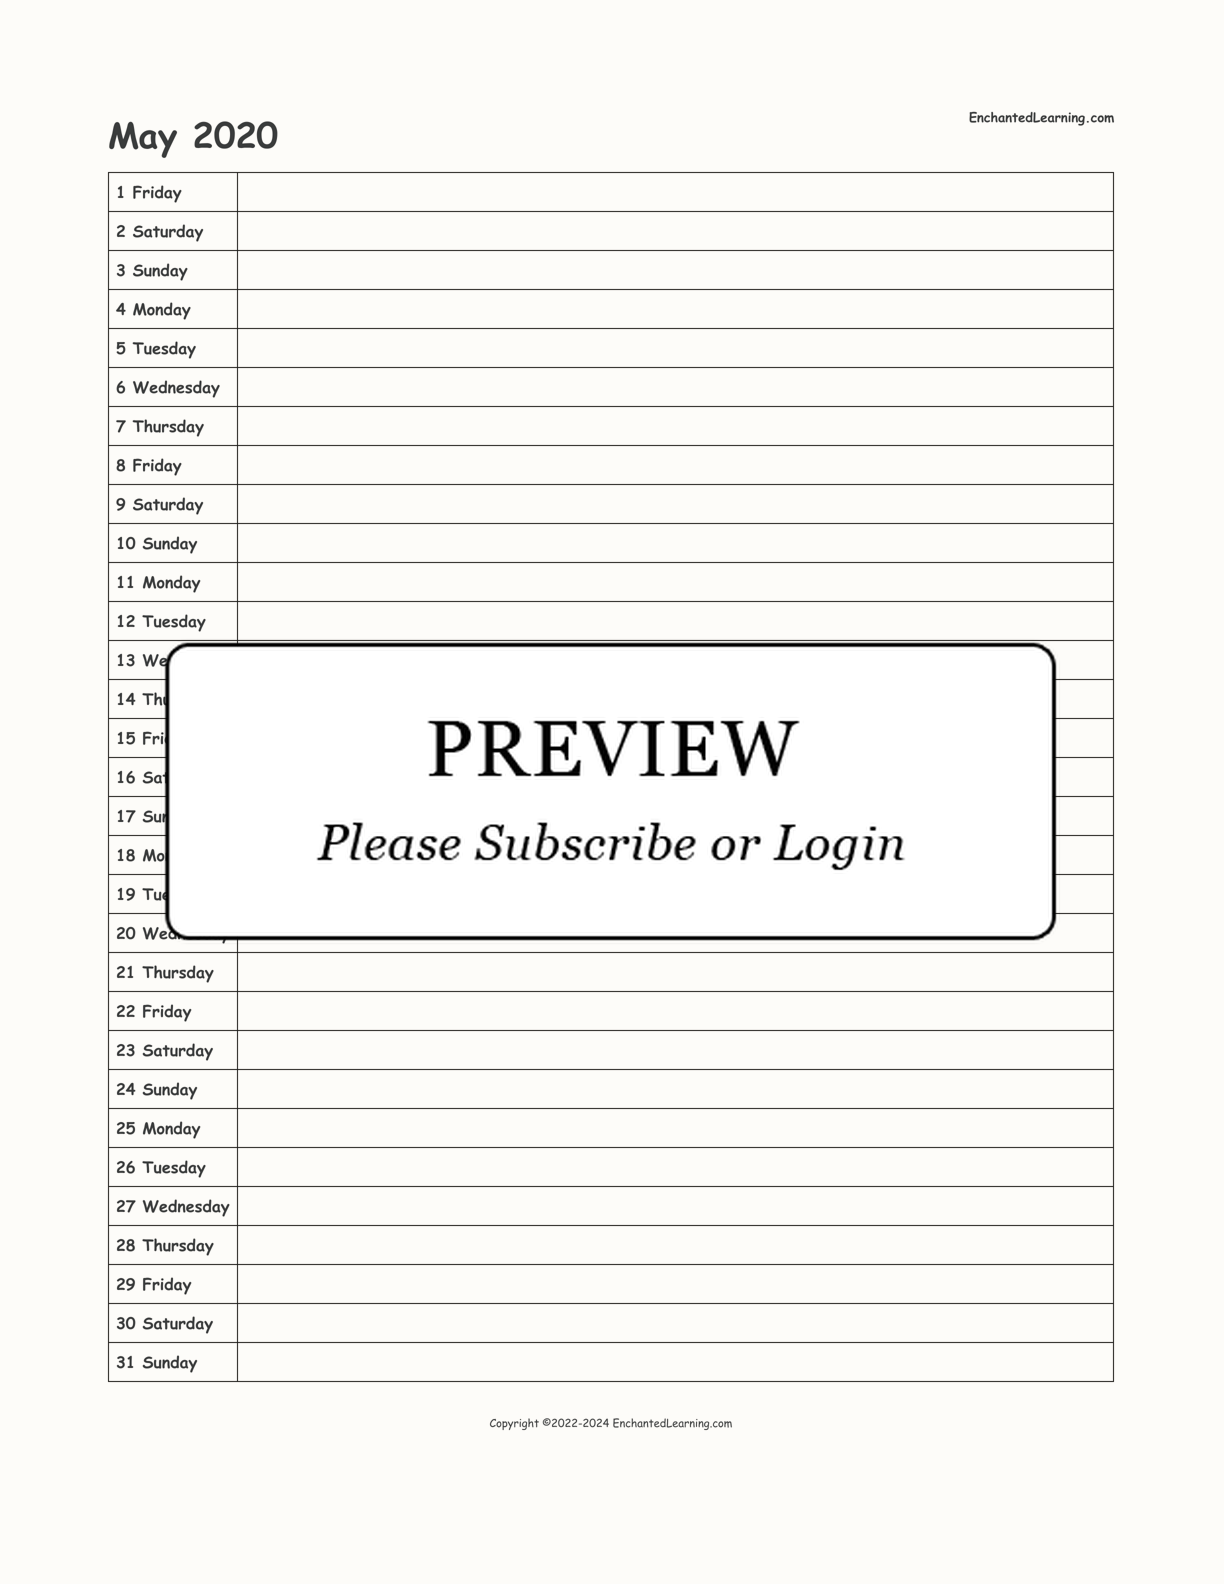 May 2020 Calendar interactive printout page 1